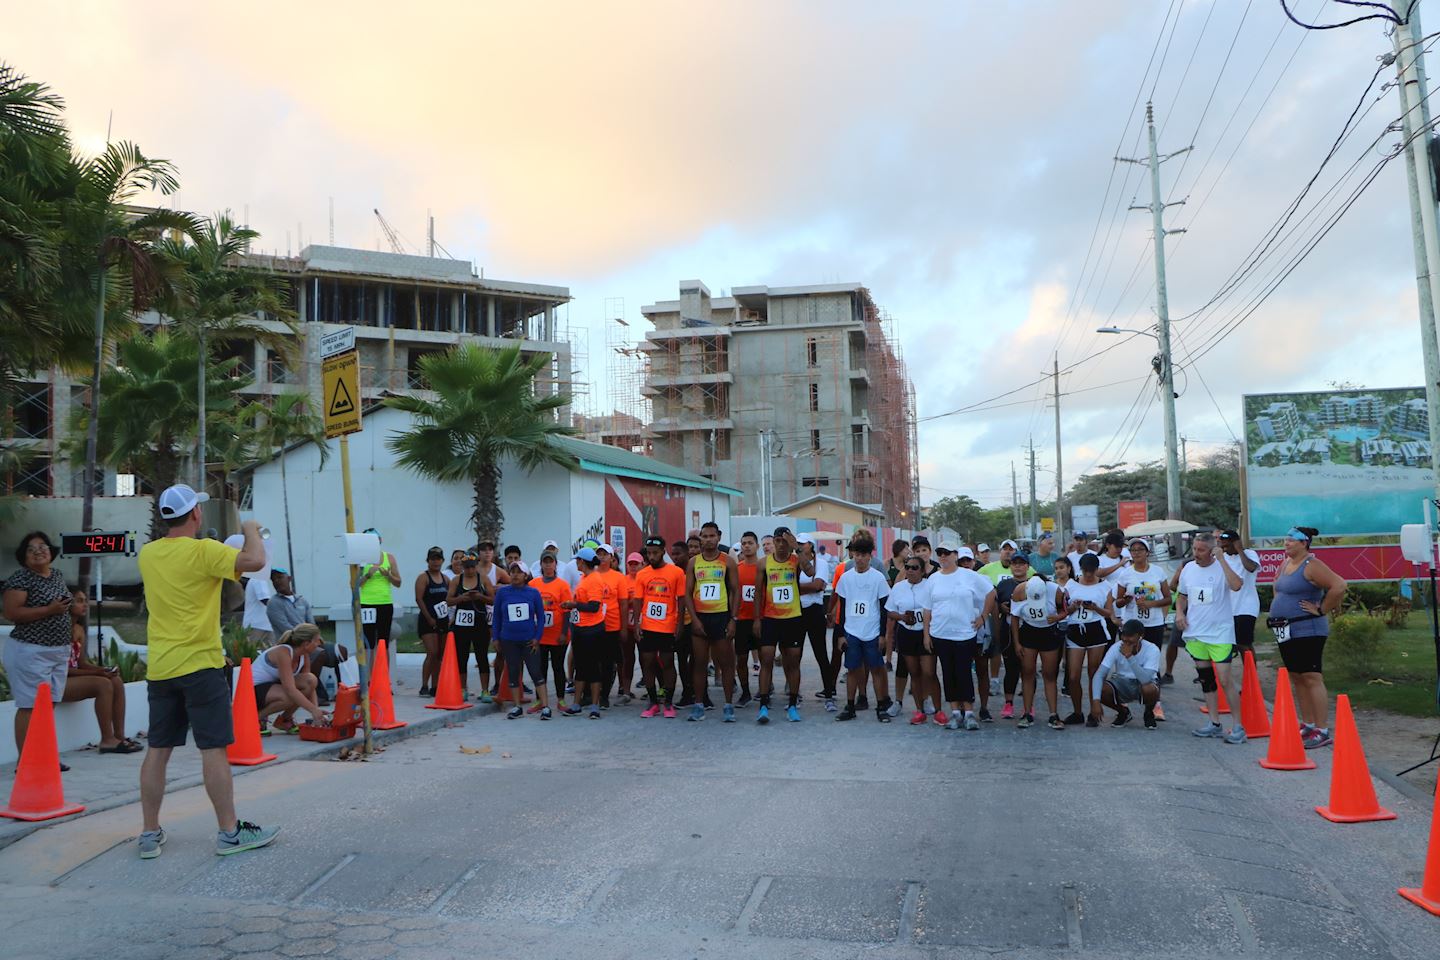 alaia foundations 2nd 5k half marathon